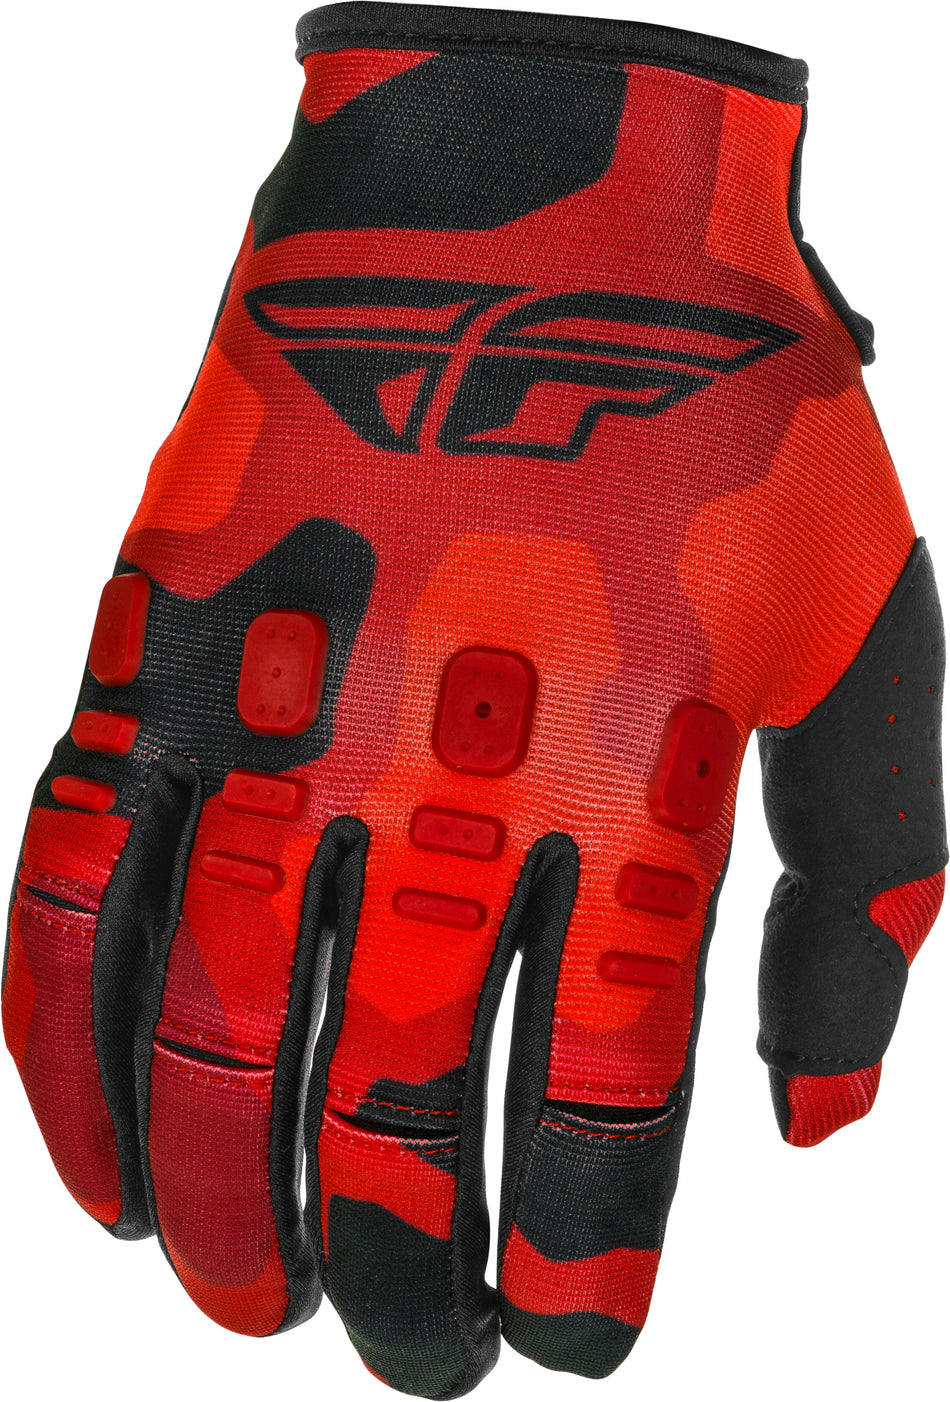 FLY RACING Kinetic K221 Gloves Red/Black Sz 07 374-51207